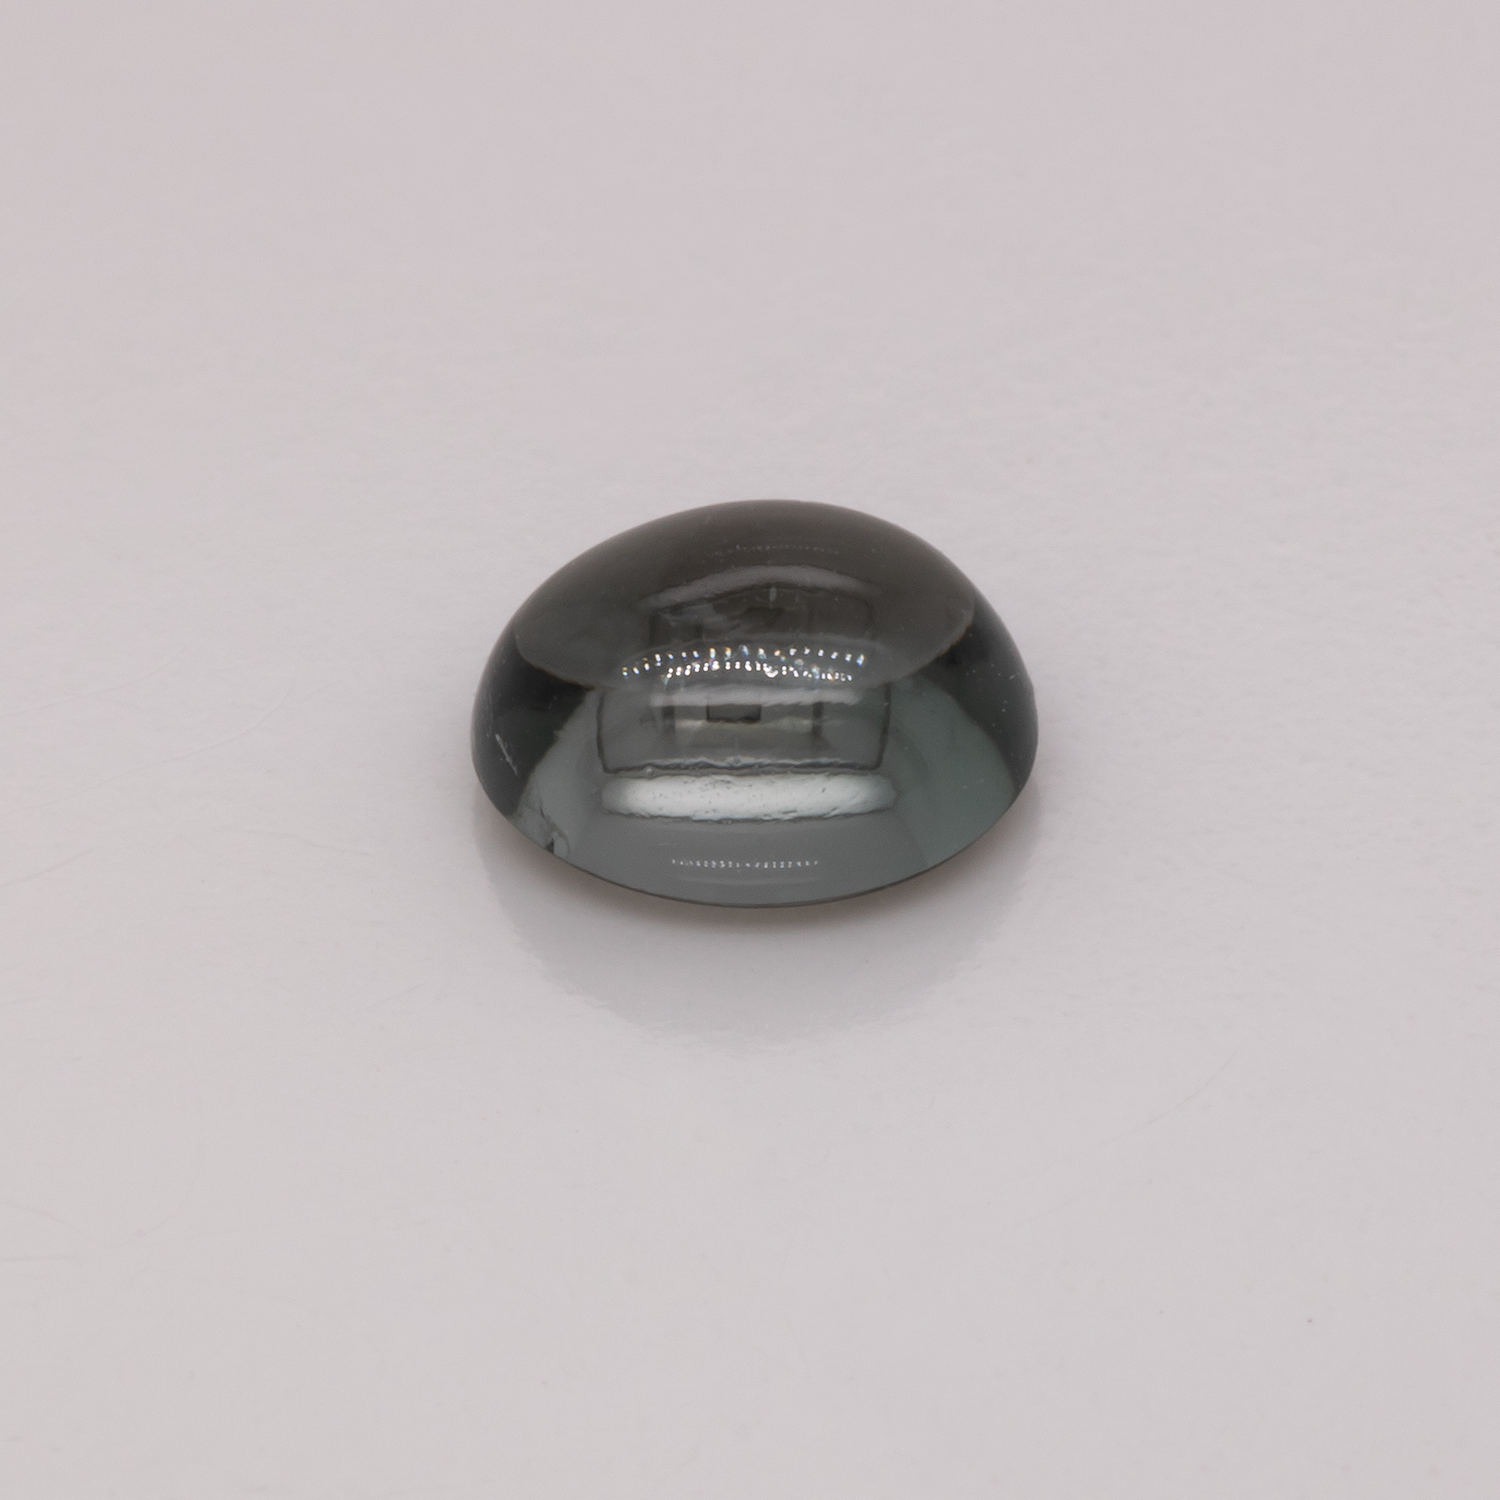 Tourmaline - grey, oval, 6.8x5.5 mm, 1.06 cts, No. TR99103